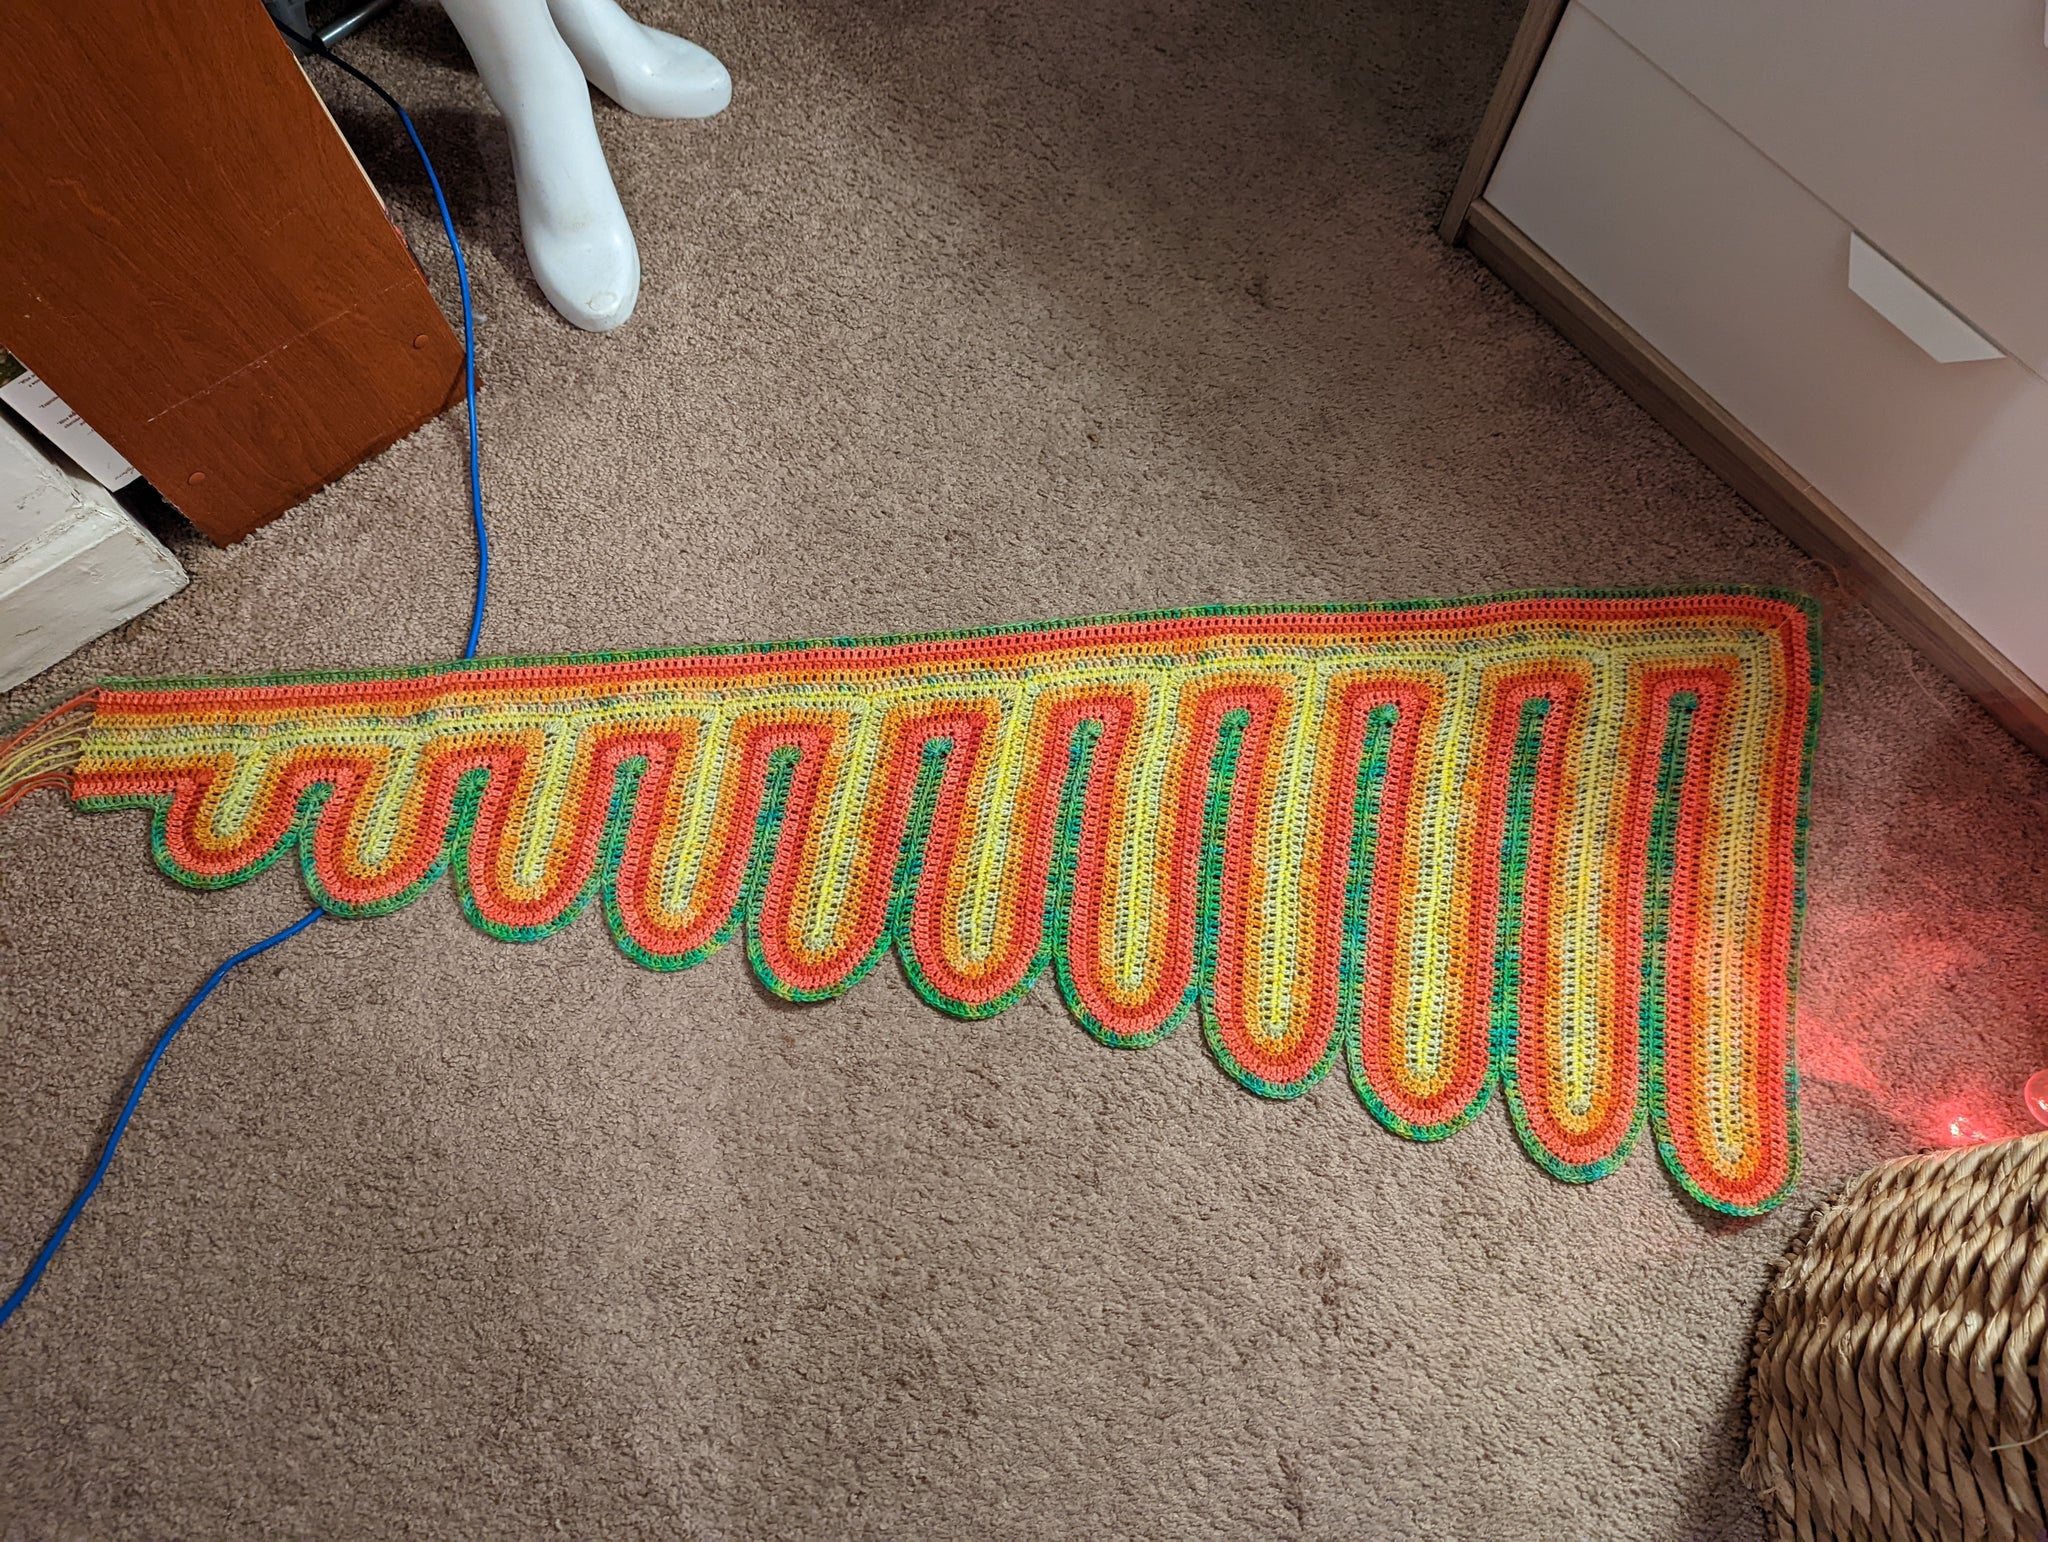 'Neverweaver' Dragon Tail Shawl Downloadable Crochet Pattern